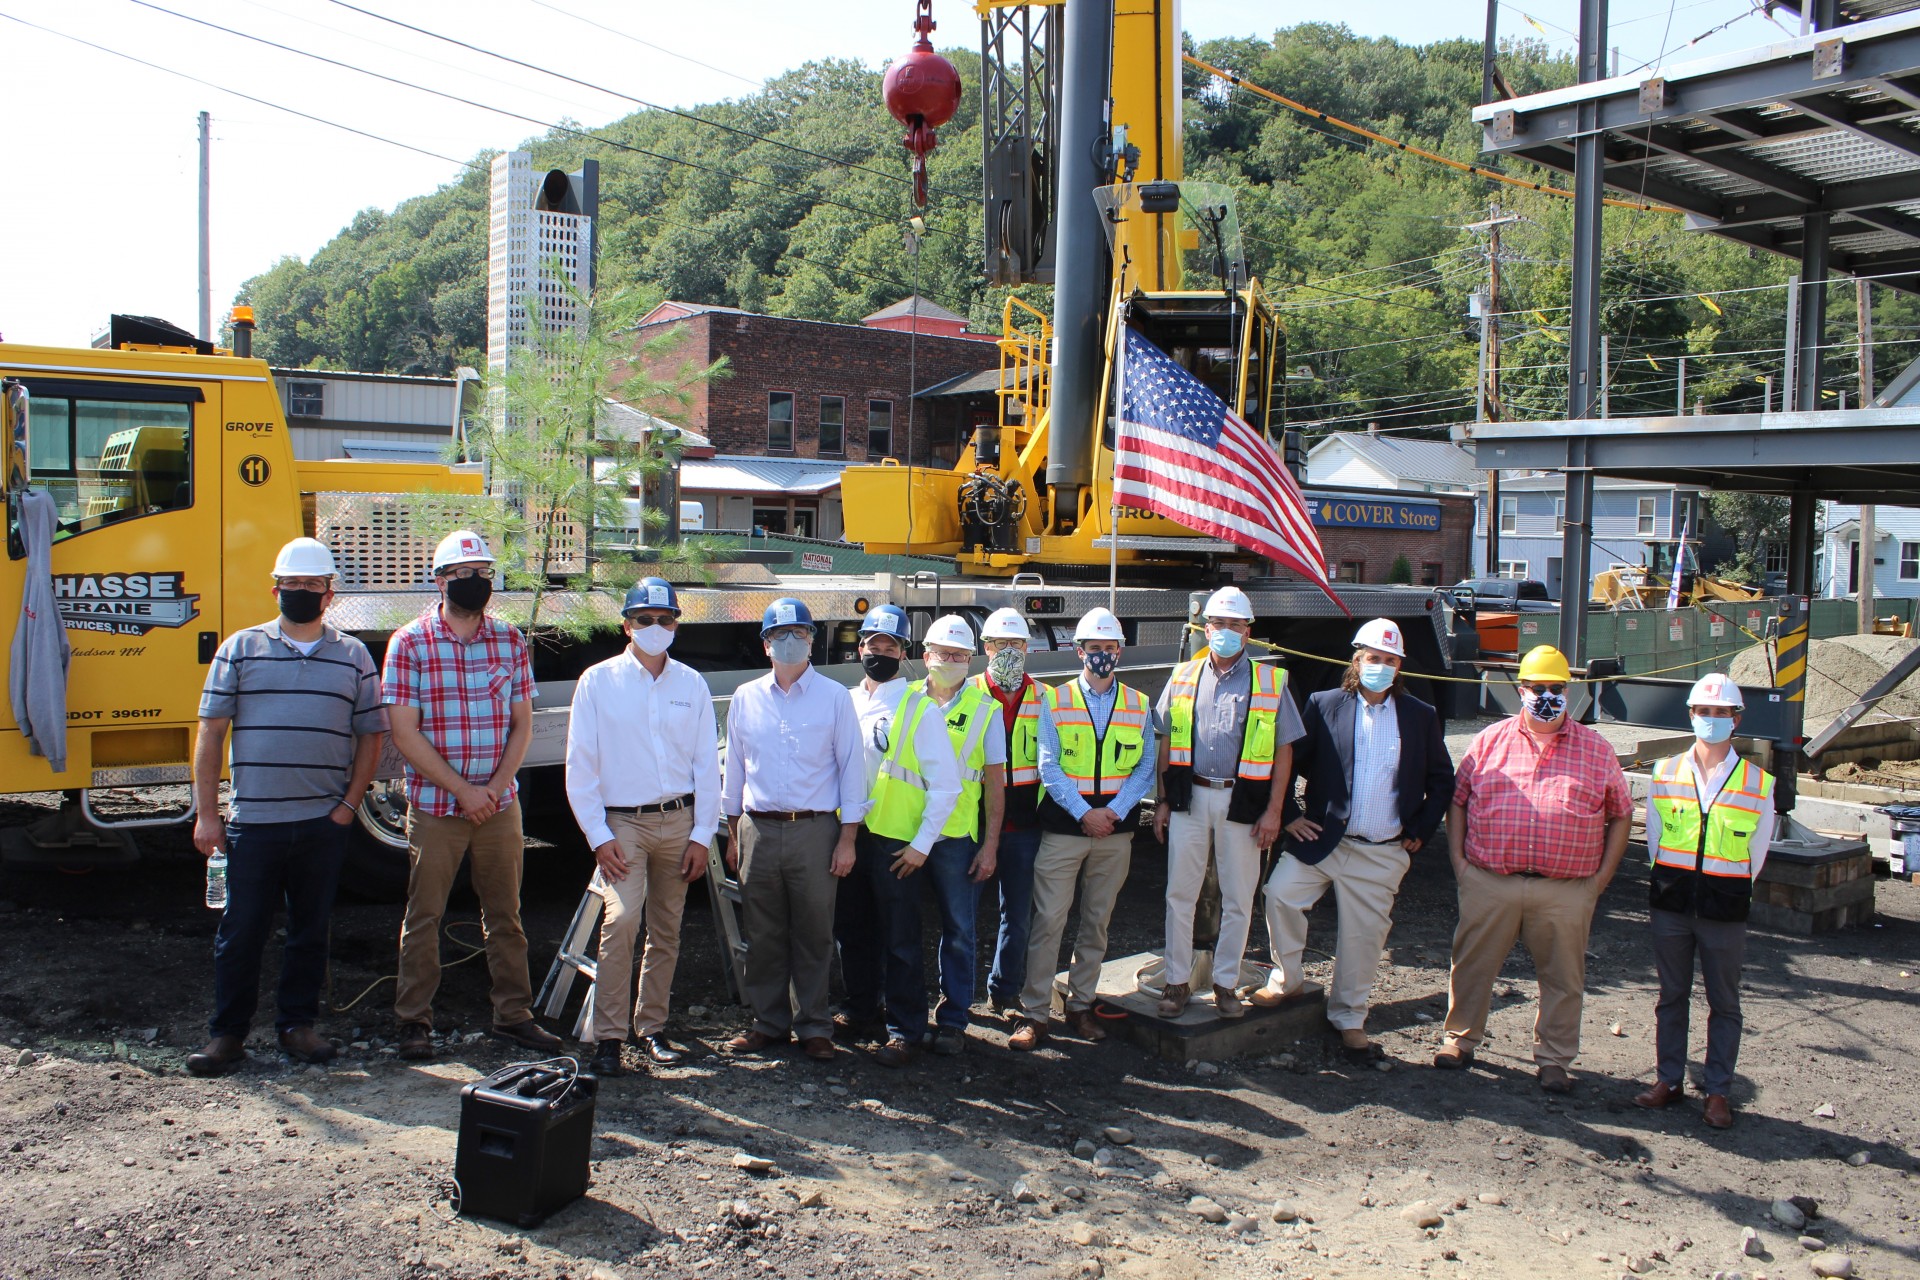 Jewett Construction Celebrates Celebrates Construction Milestone in Vermont